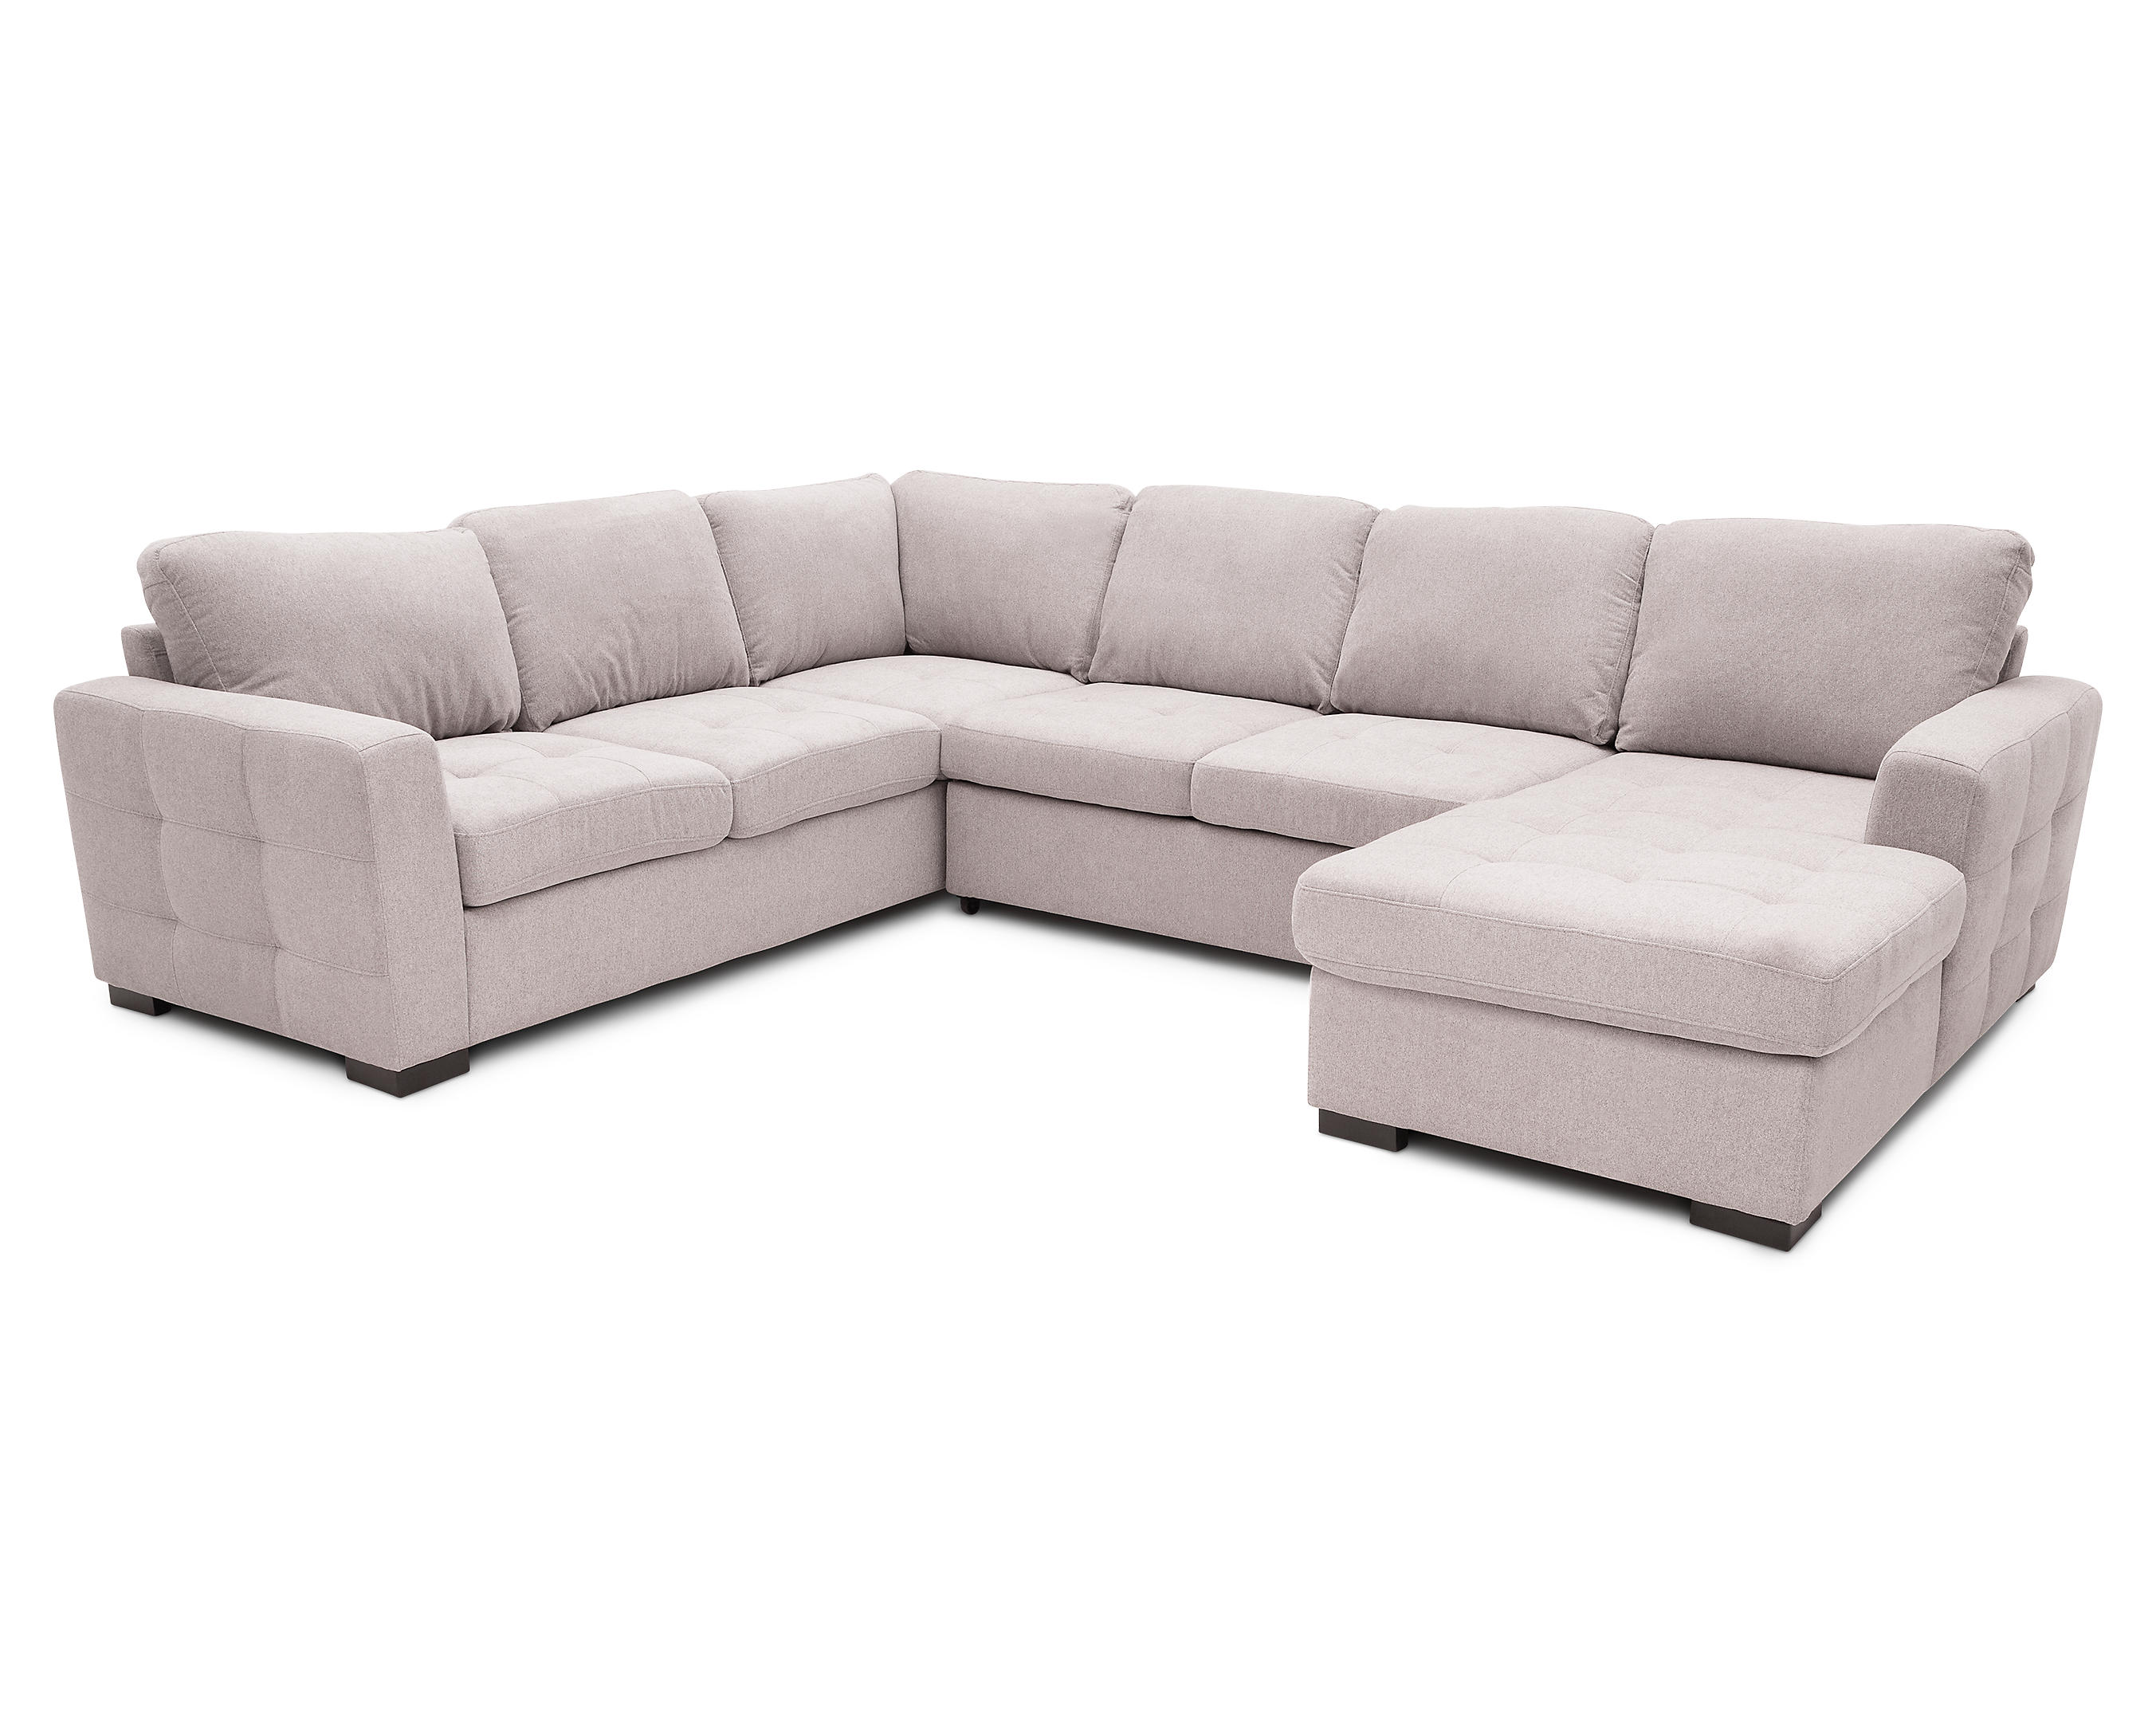 Caruso 3 Pc Fabric Sleeper Sectional, Tan Sectional Sleeper Sofa